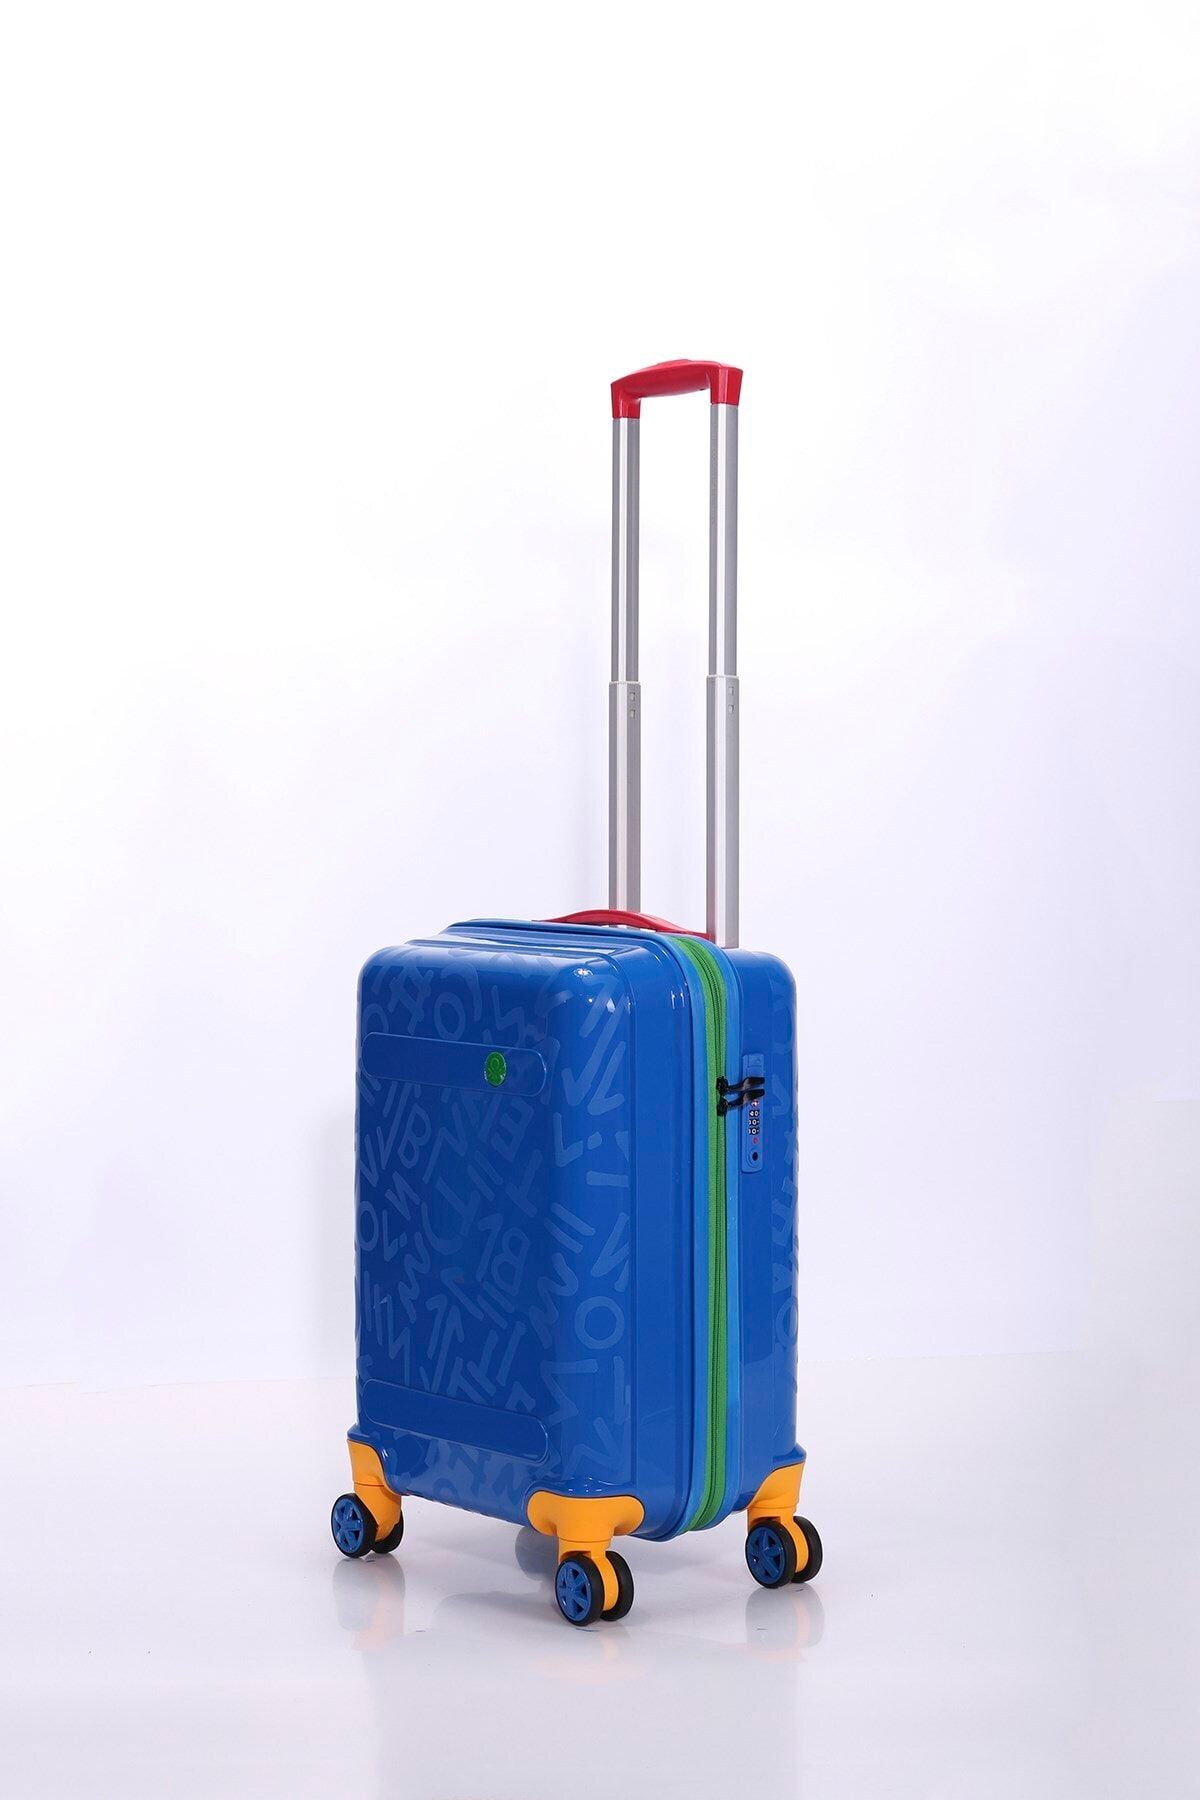 Benetton چمدان مسافرتی Bntp301x Pp جین کابین آبی سایز BNTP301X